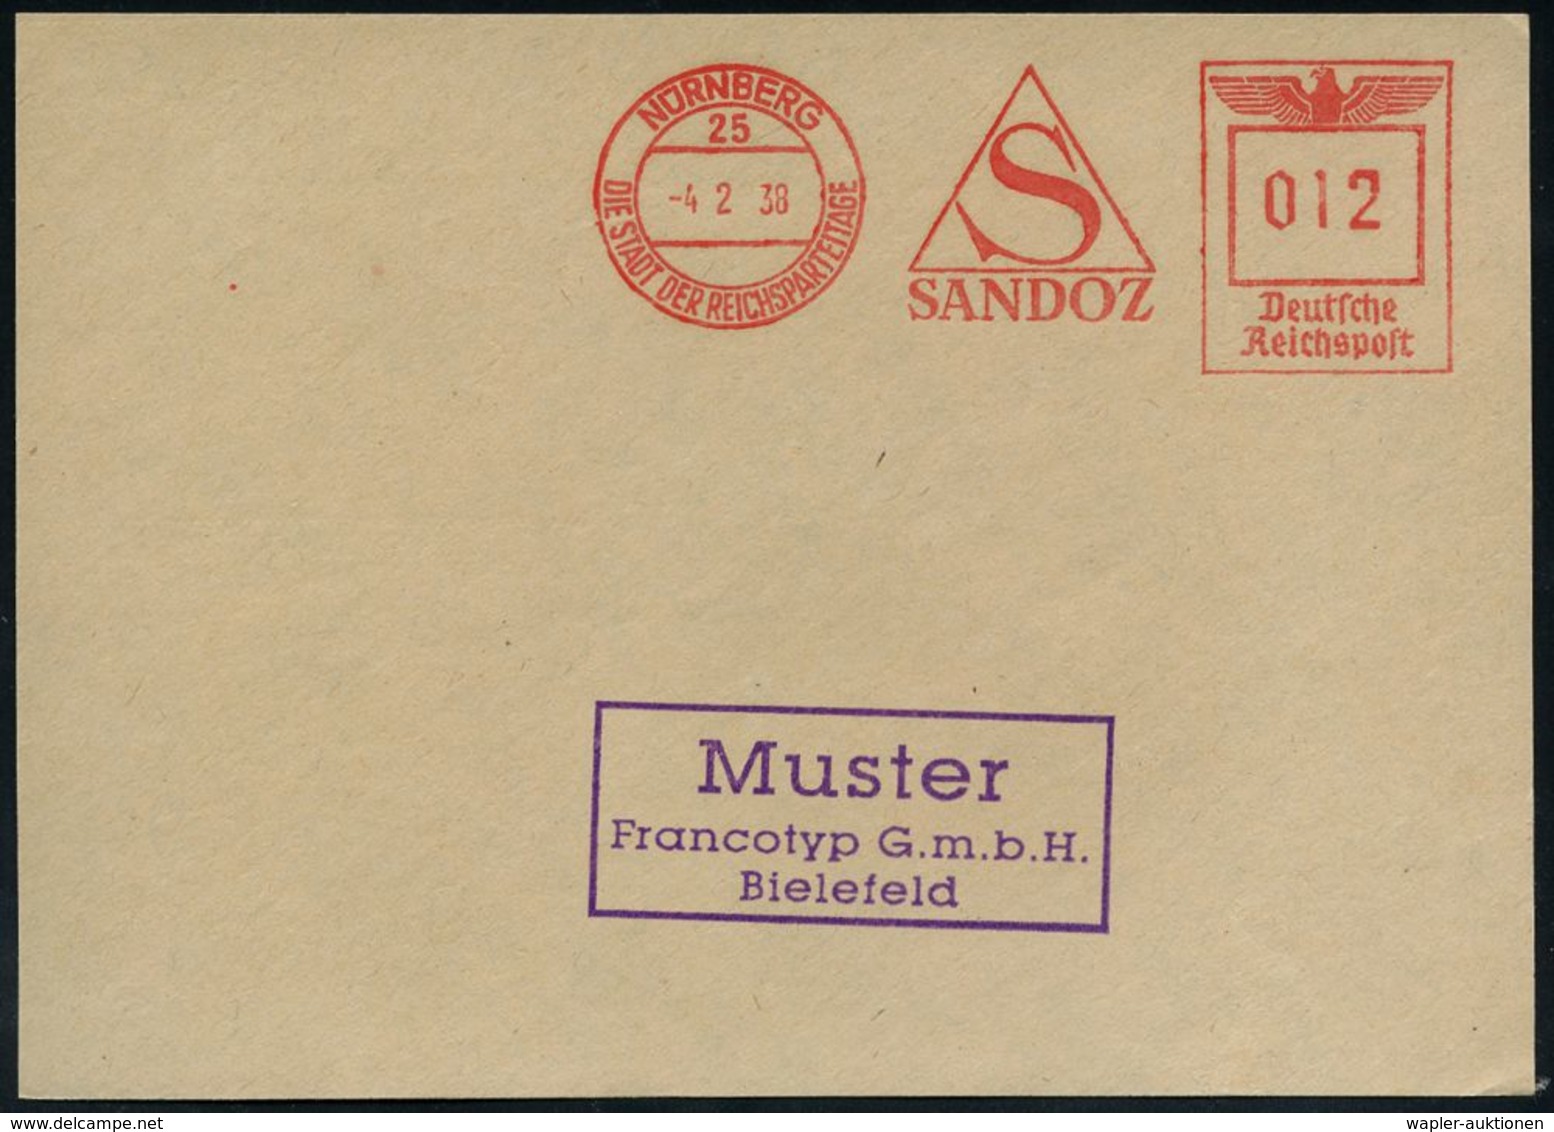 CHEMIE / PRODUKTE / CHEMISCHE INDUSTRIE : NÜRNBERG/ 25/ DSDR/ S/ SANDOZ 1938 (4.2.) AFS, Francoty-Archivmuster (Monogr.- - Chimie